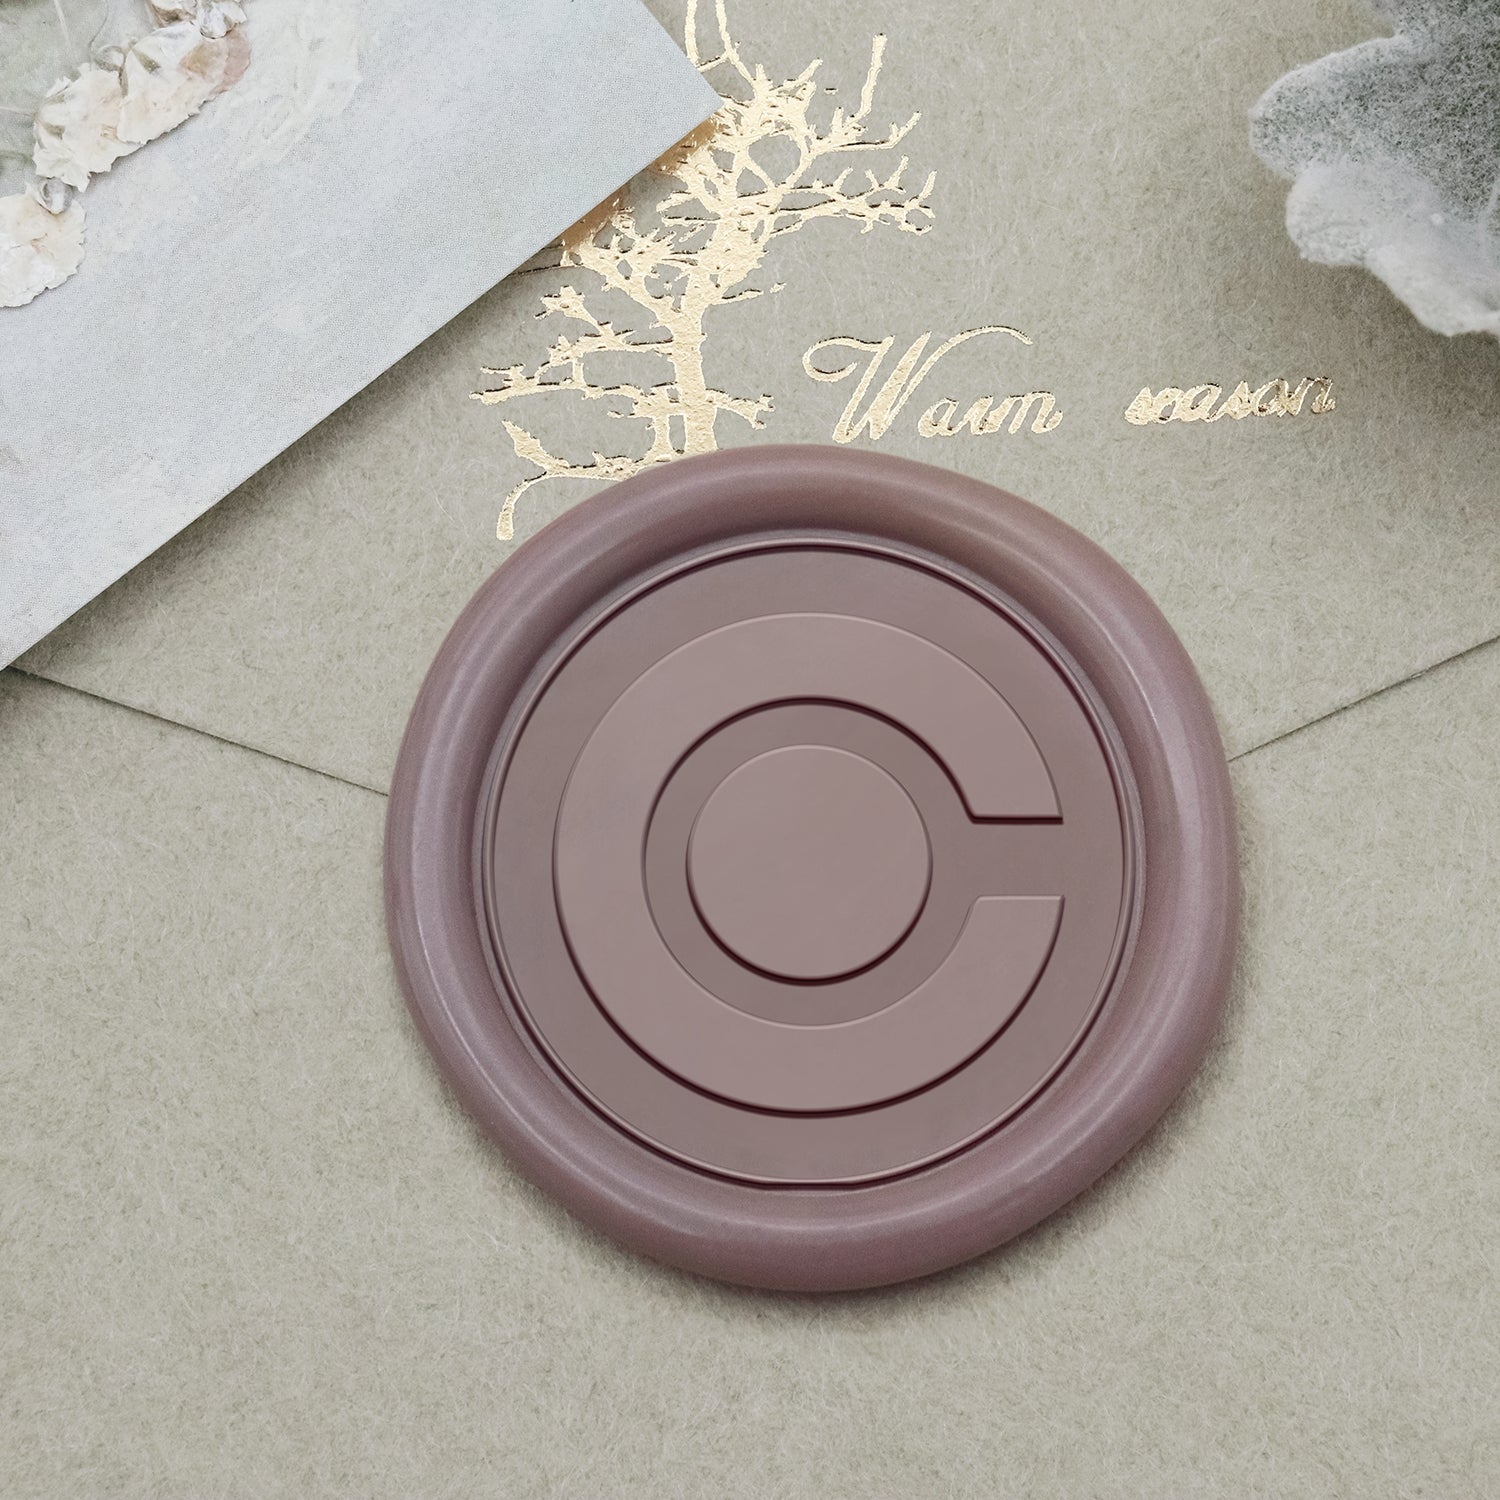 Stamprints Cyborg Wax Seal Stamp 1